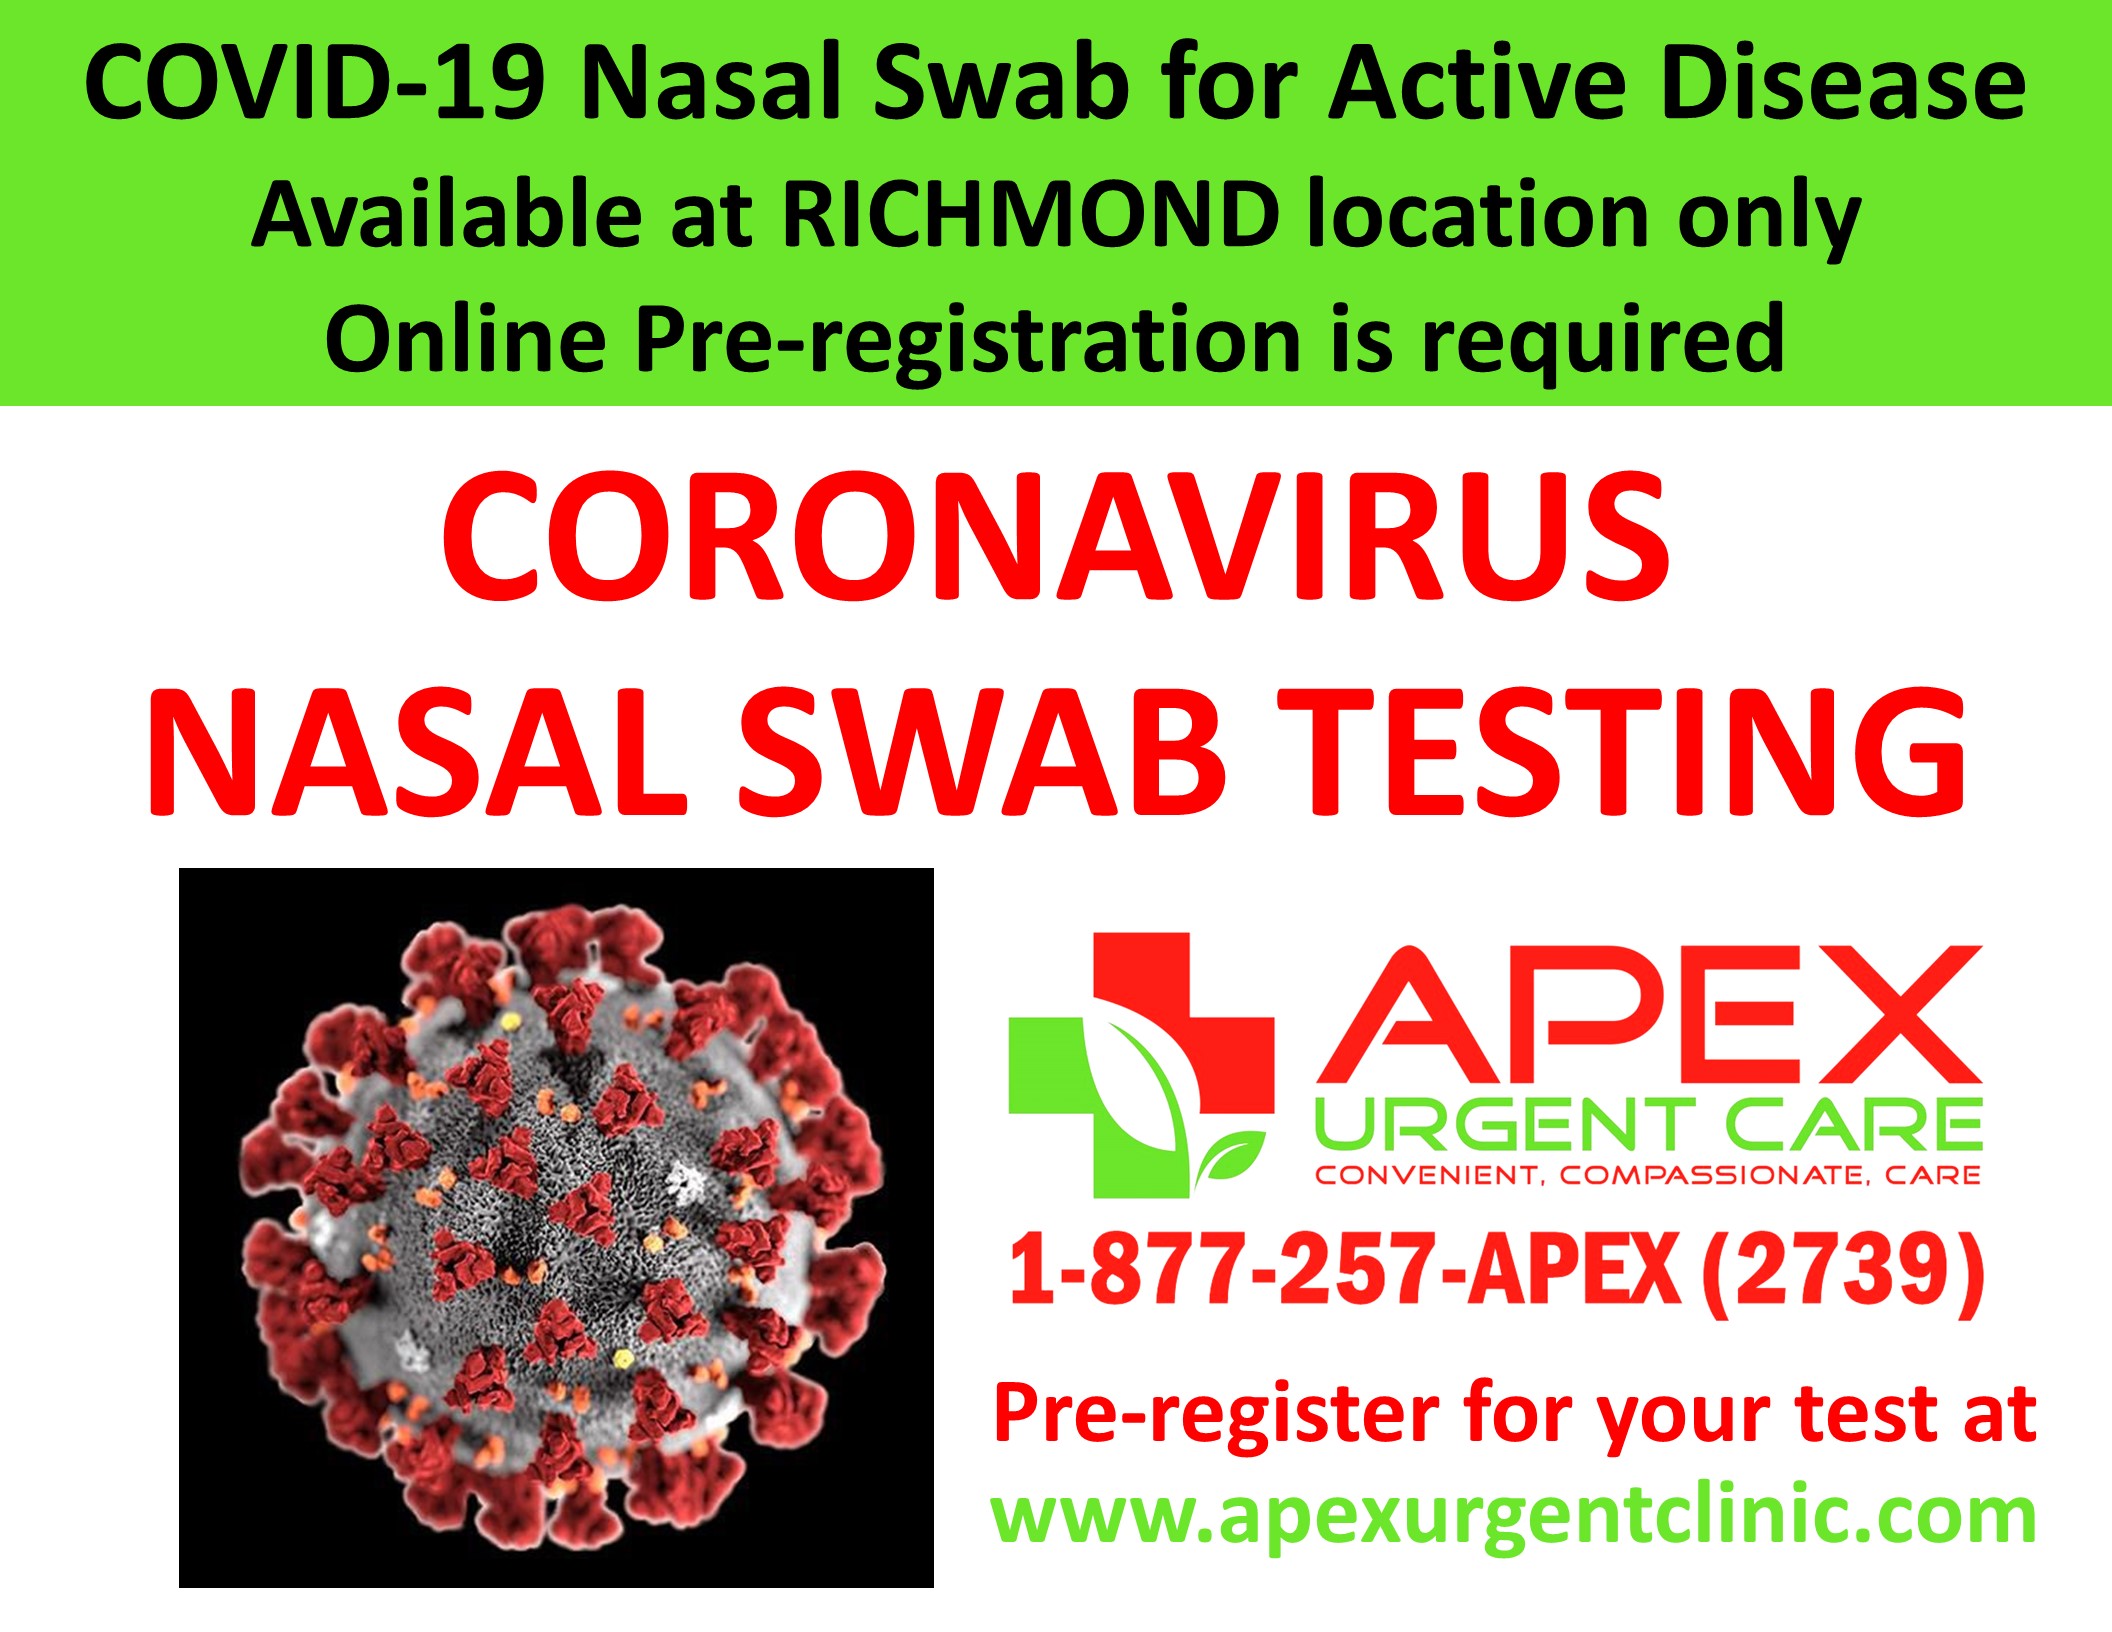 Coronavirus Nasal Swab Testing Flyer